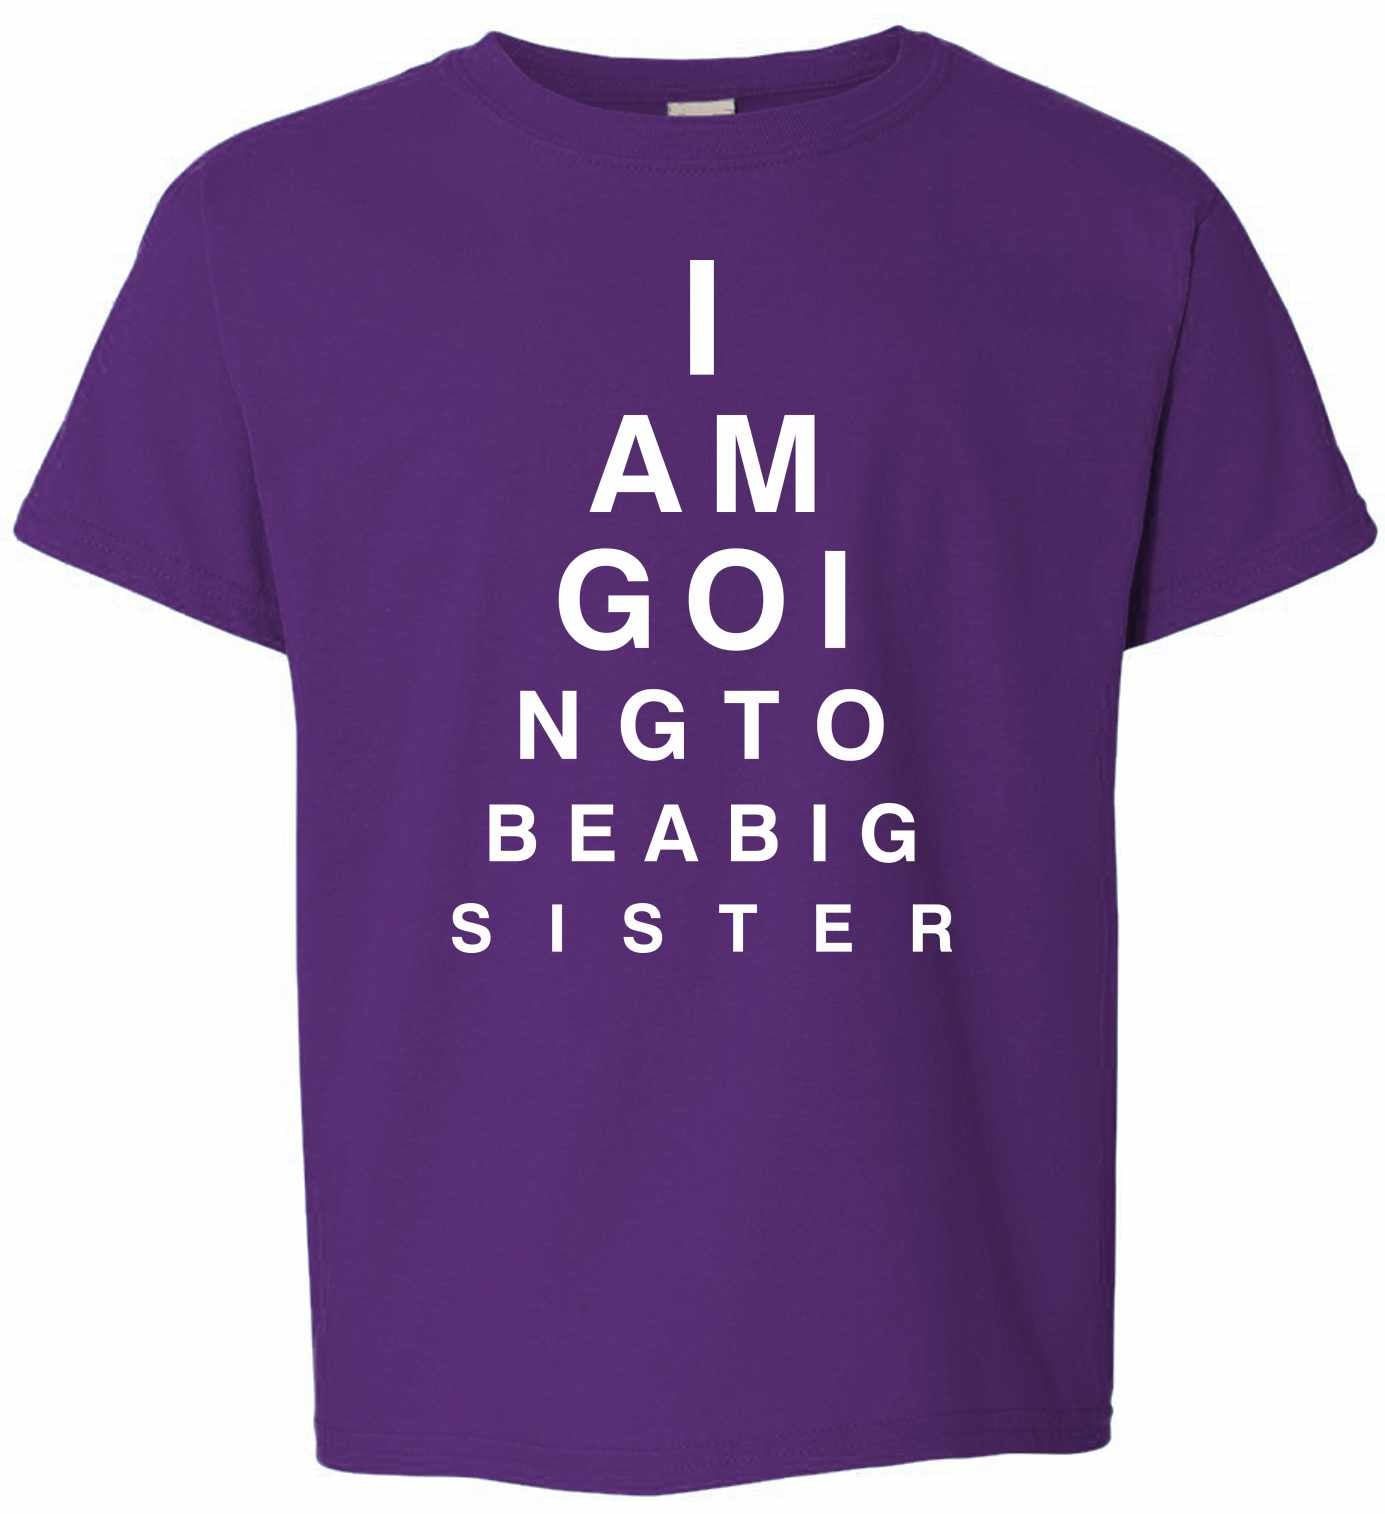 I AM GOING TO BE BIG SISTER EYE CHART on Kids T-Shirt